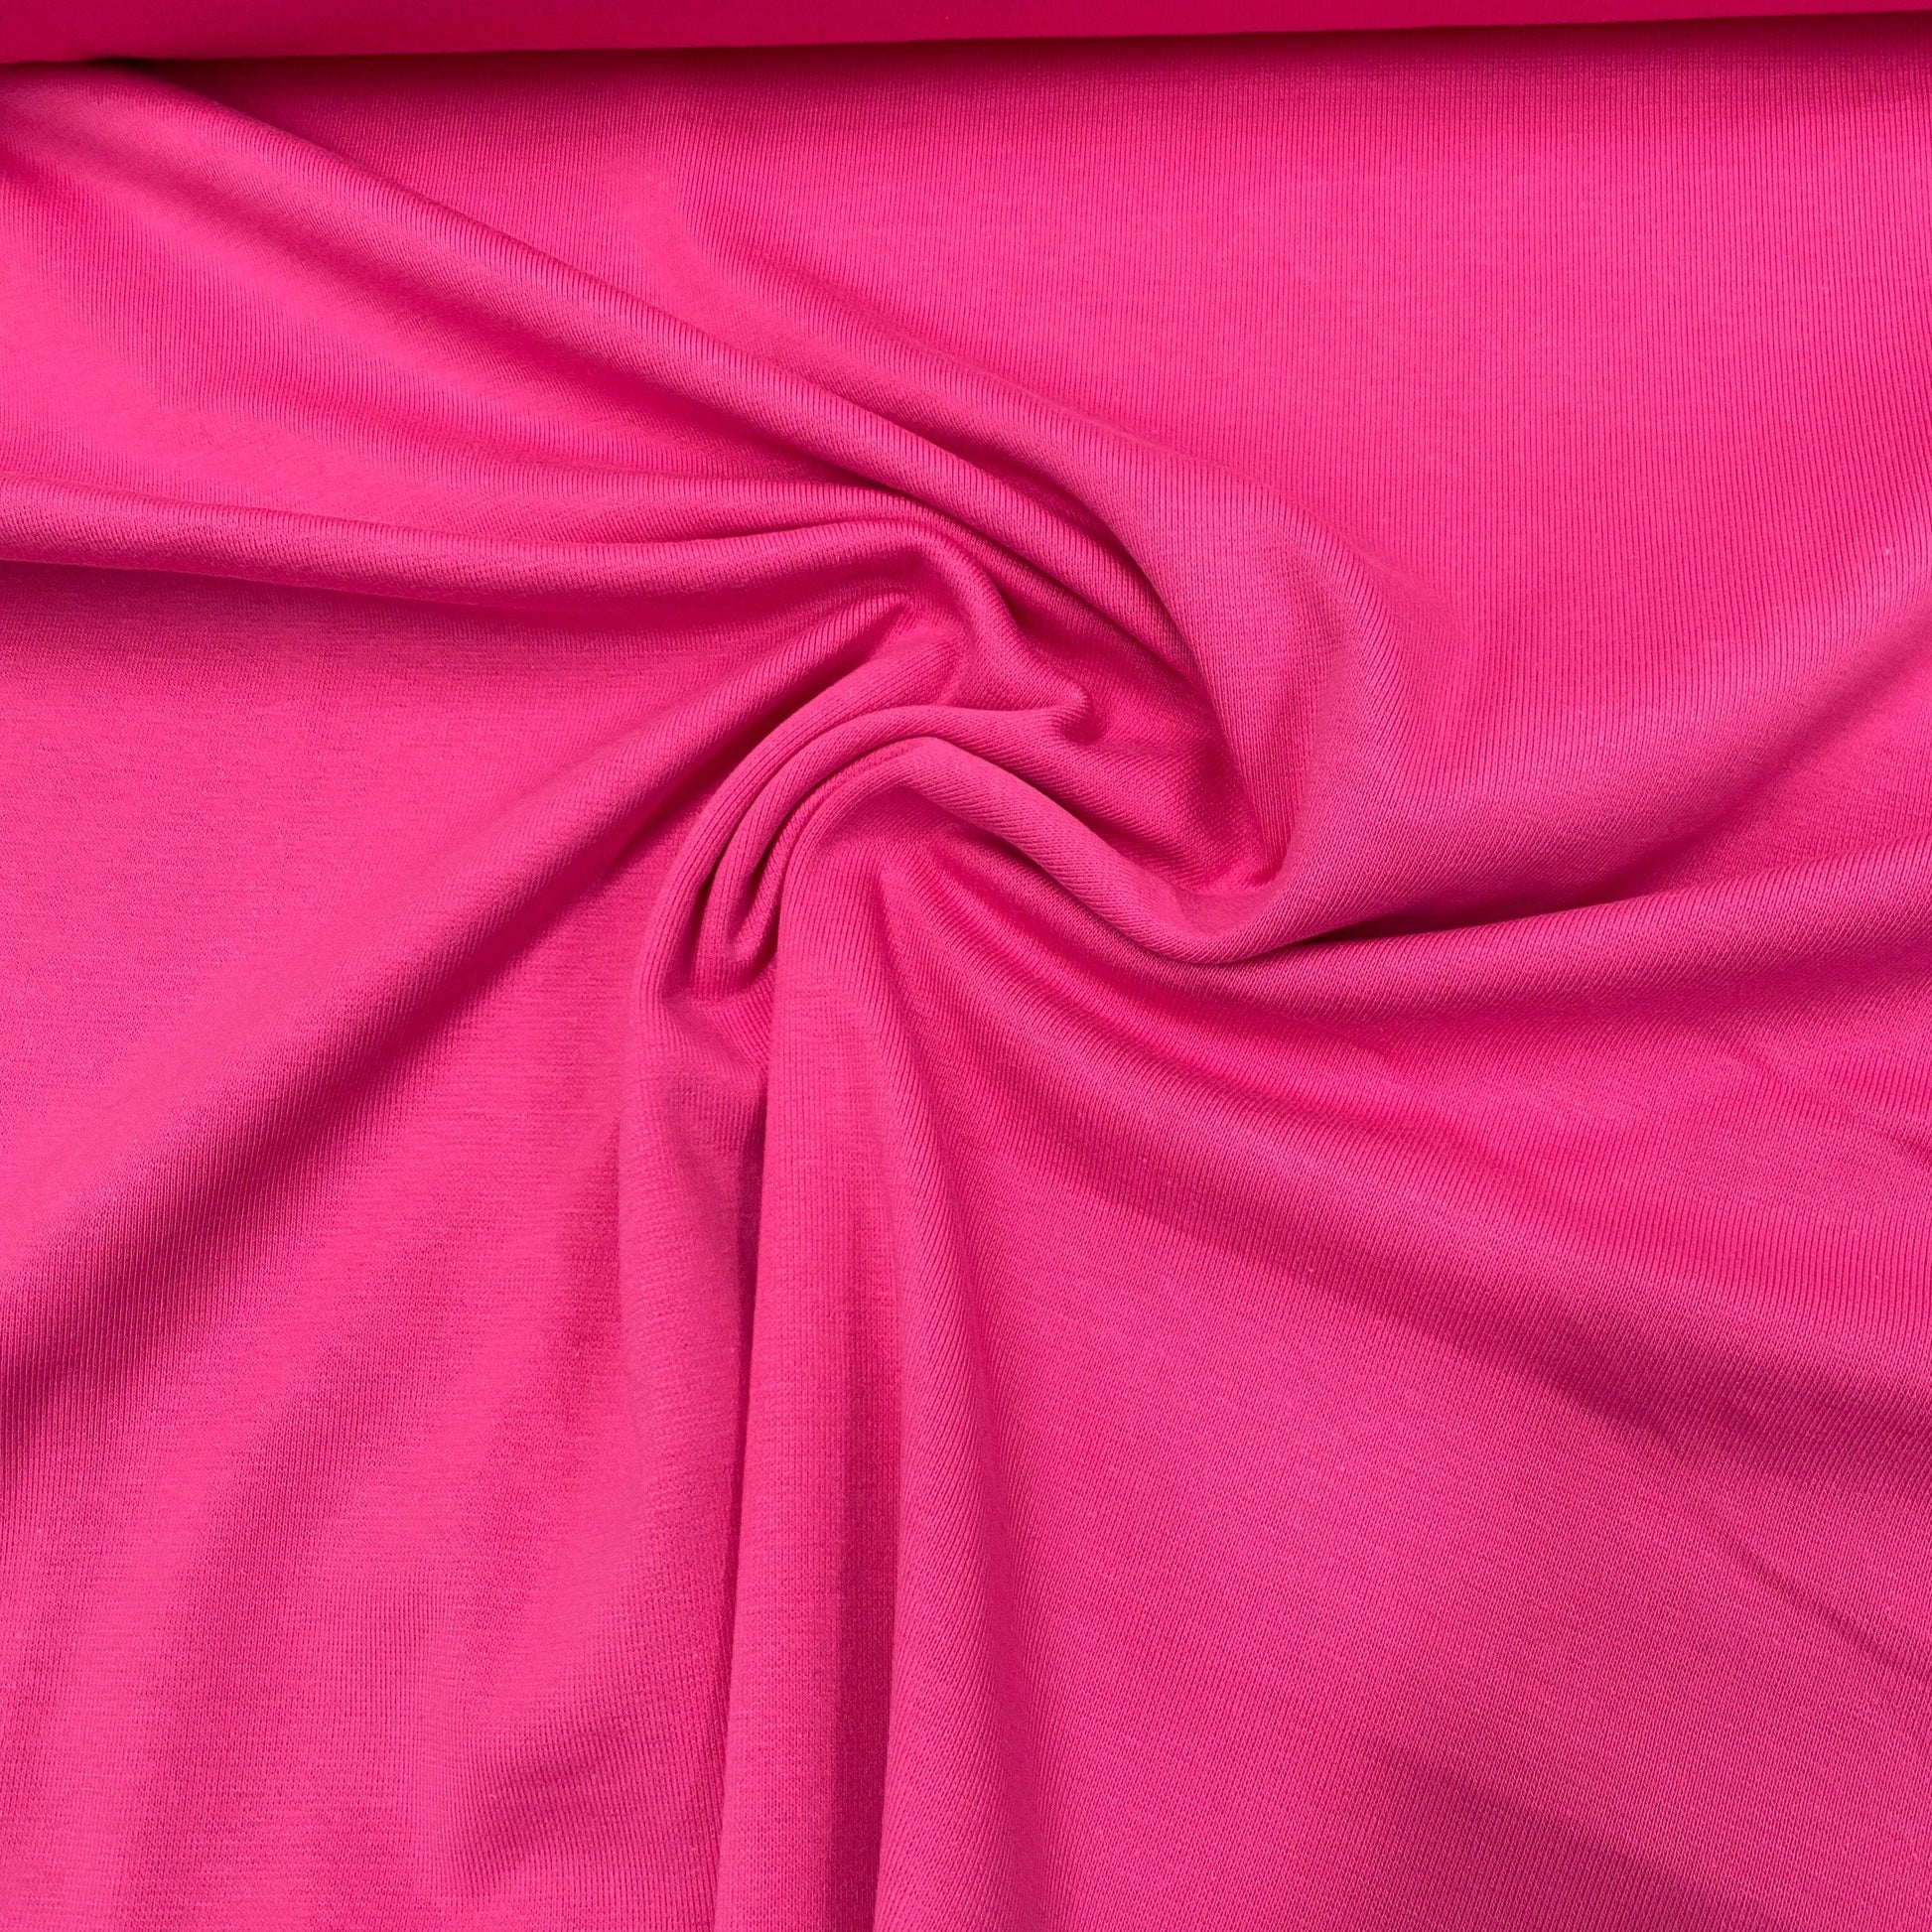 Hot Pink Cotton/Spandex Rib Knit Fabric - Nature's Fabrics